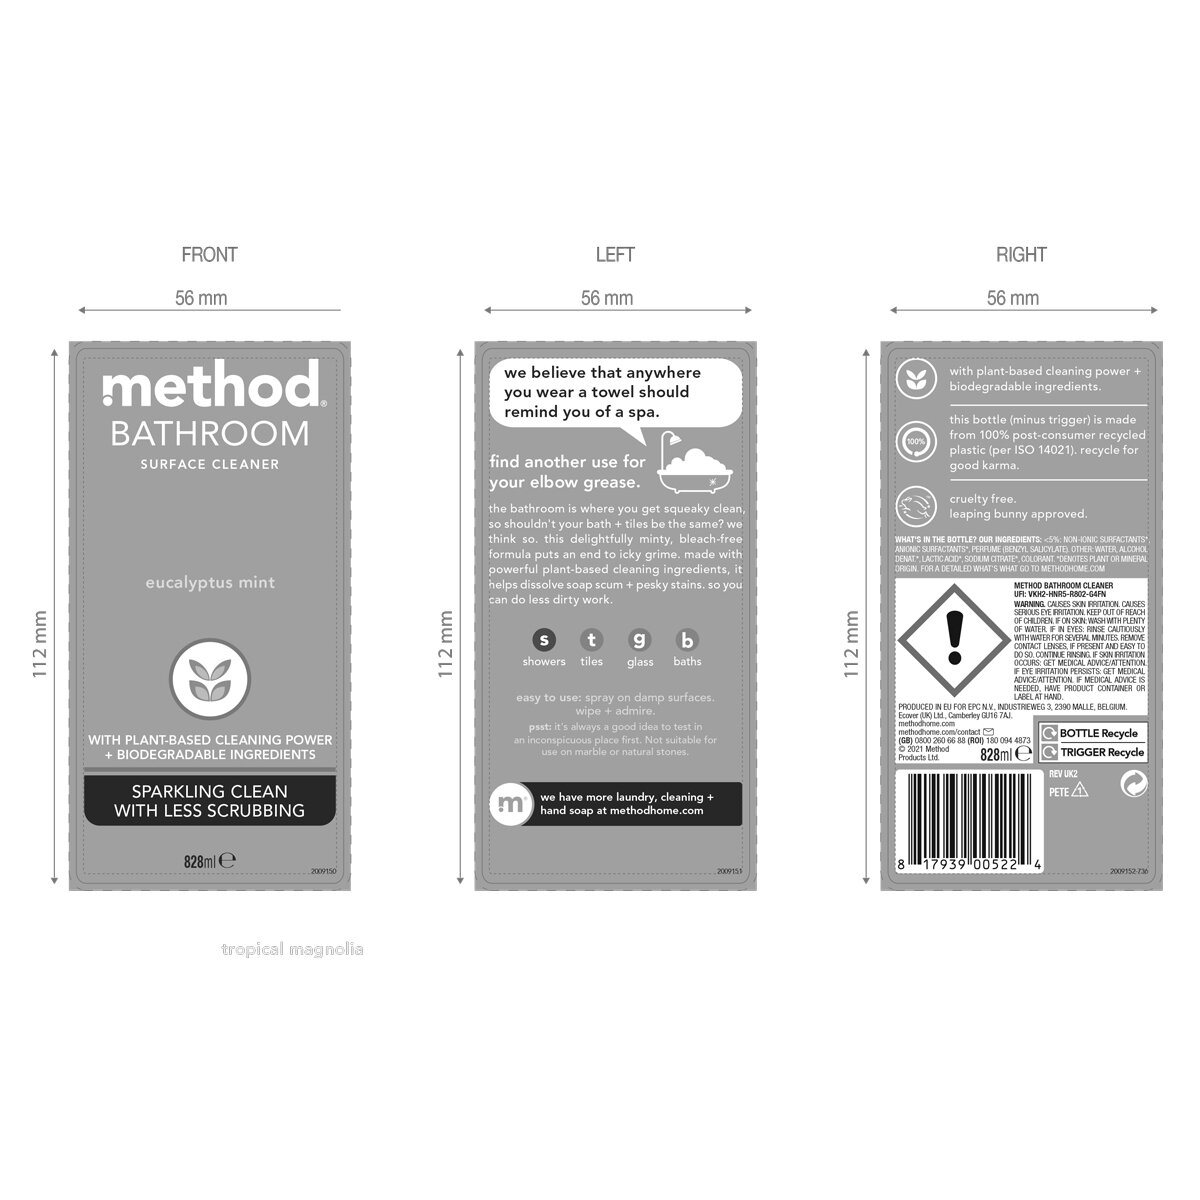 Method Bathroom Surface Cleaner, 828ml Information